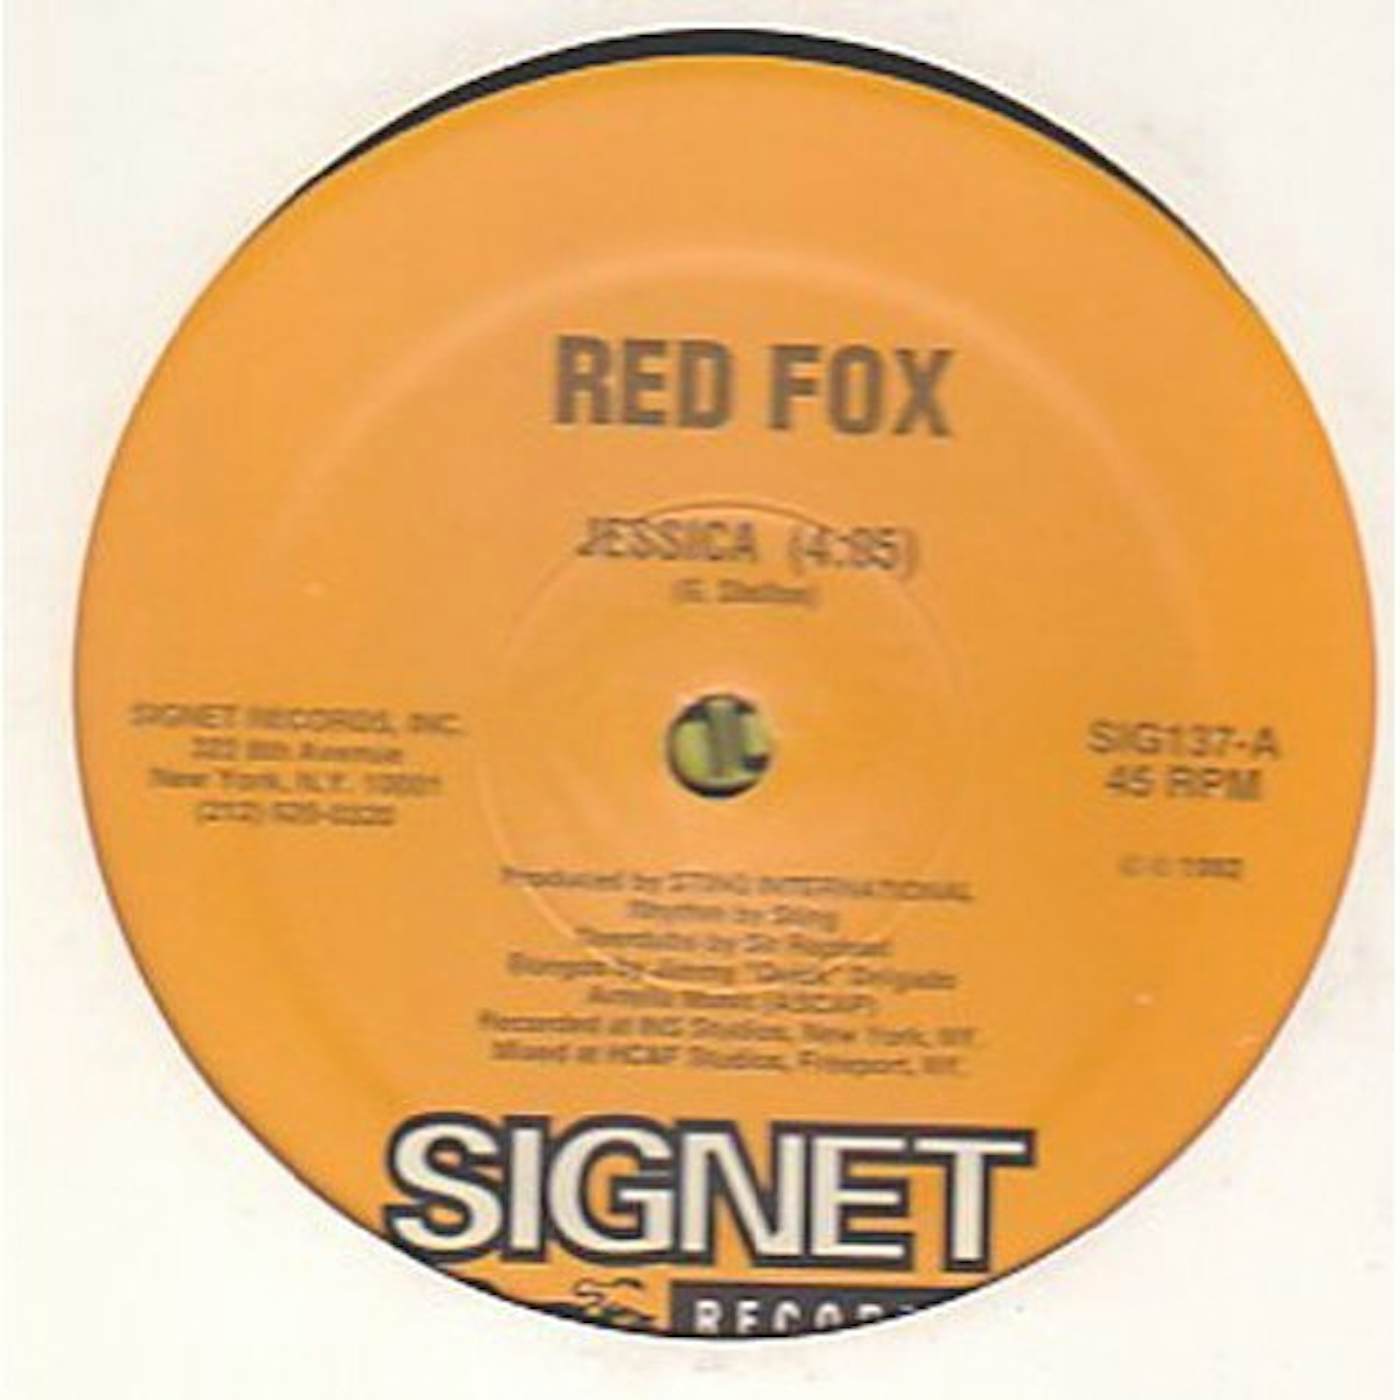 Red Fox JESSICA/CRAB LOUSE Vinyl Record